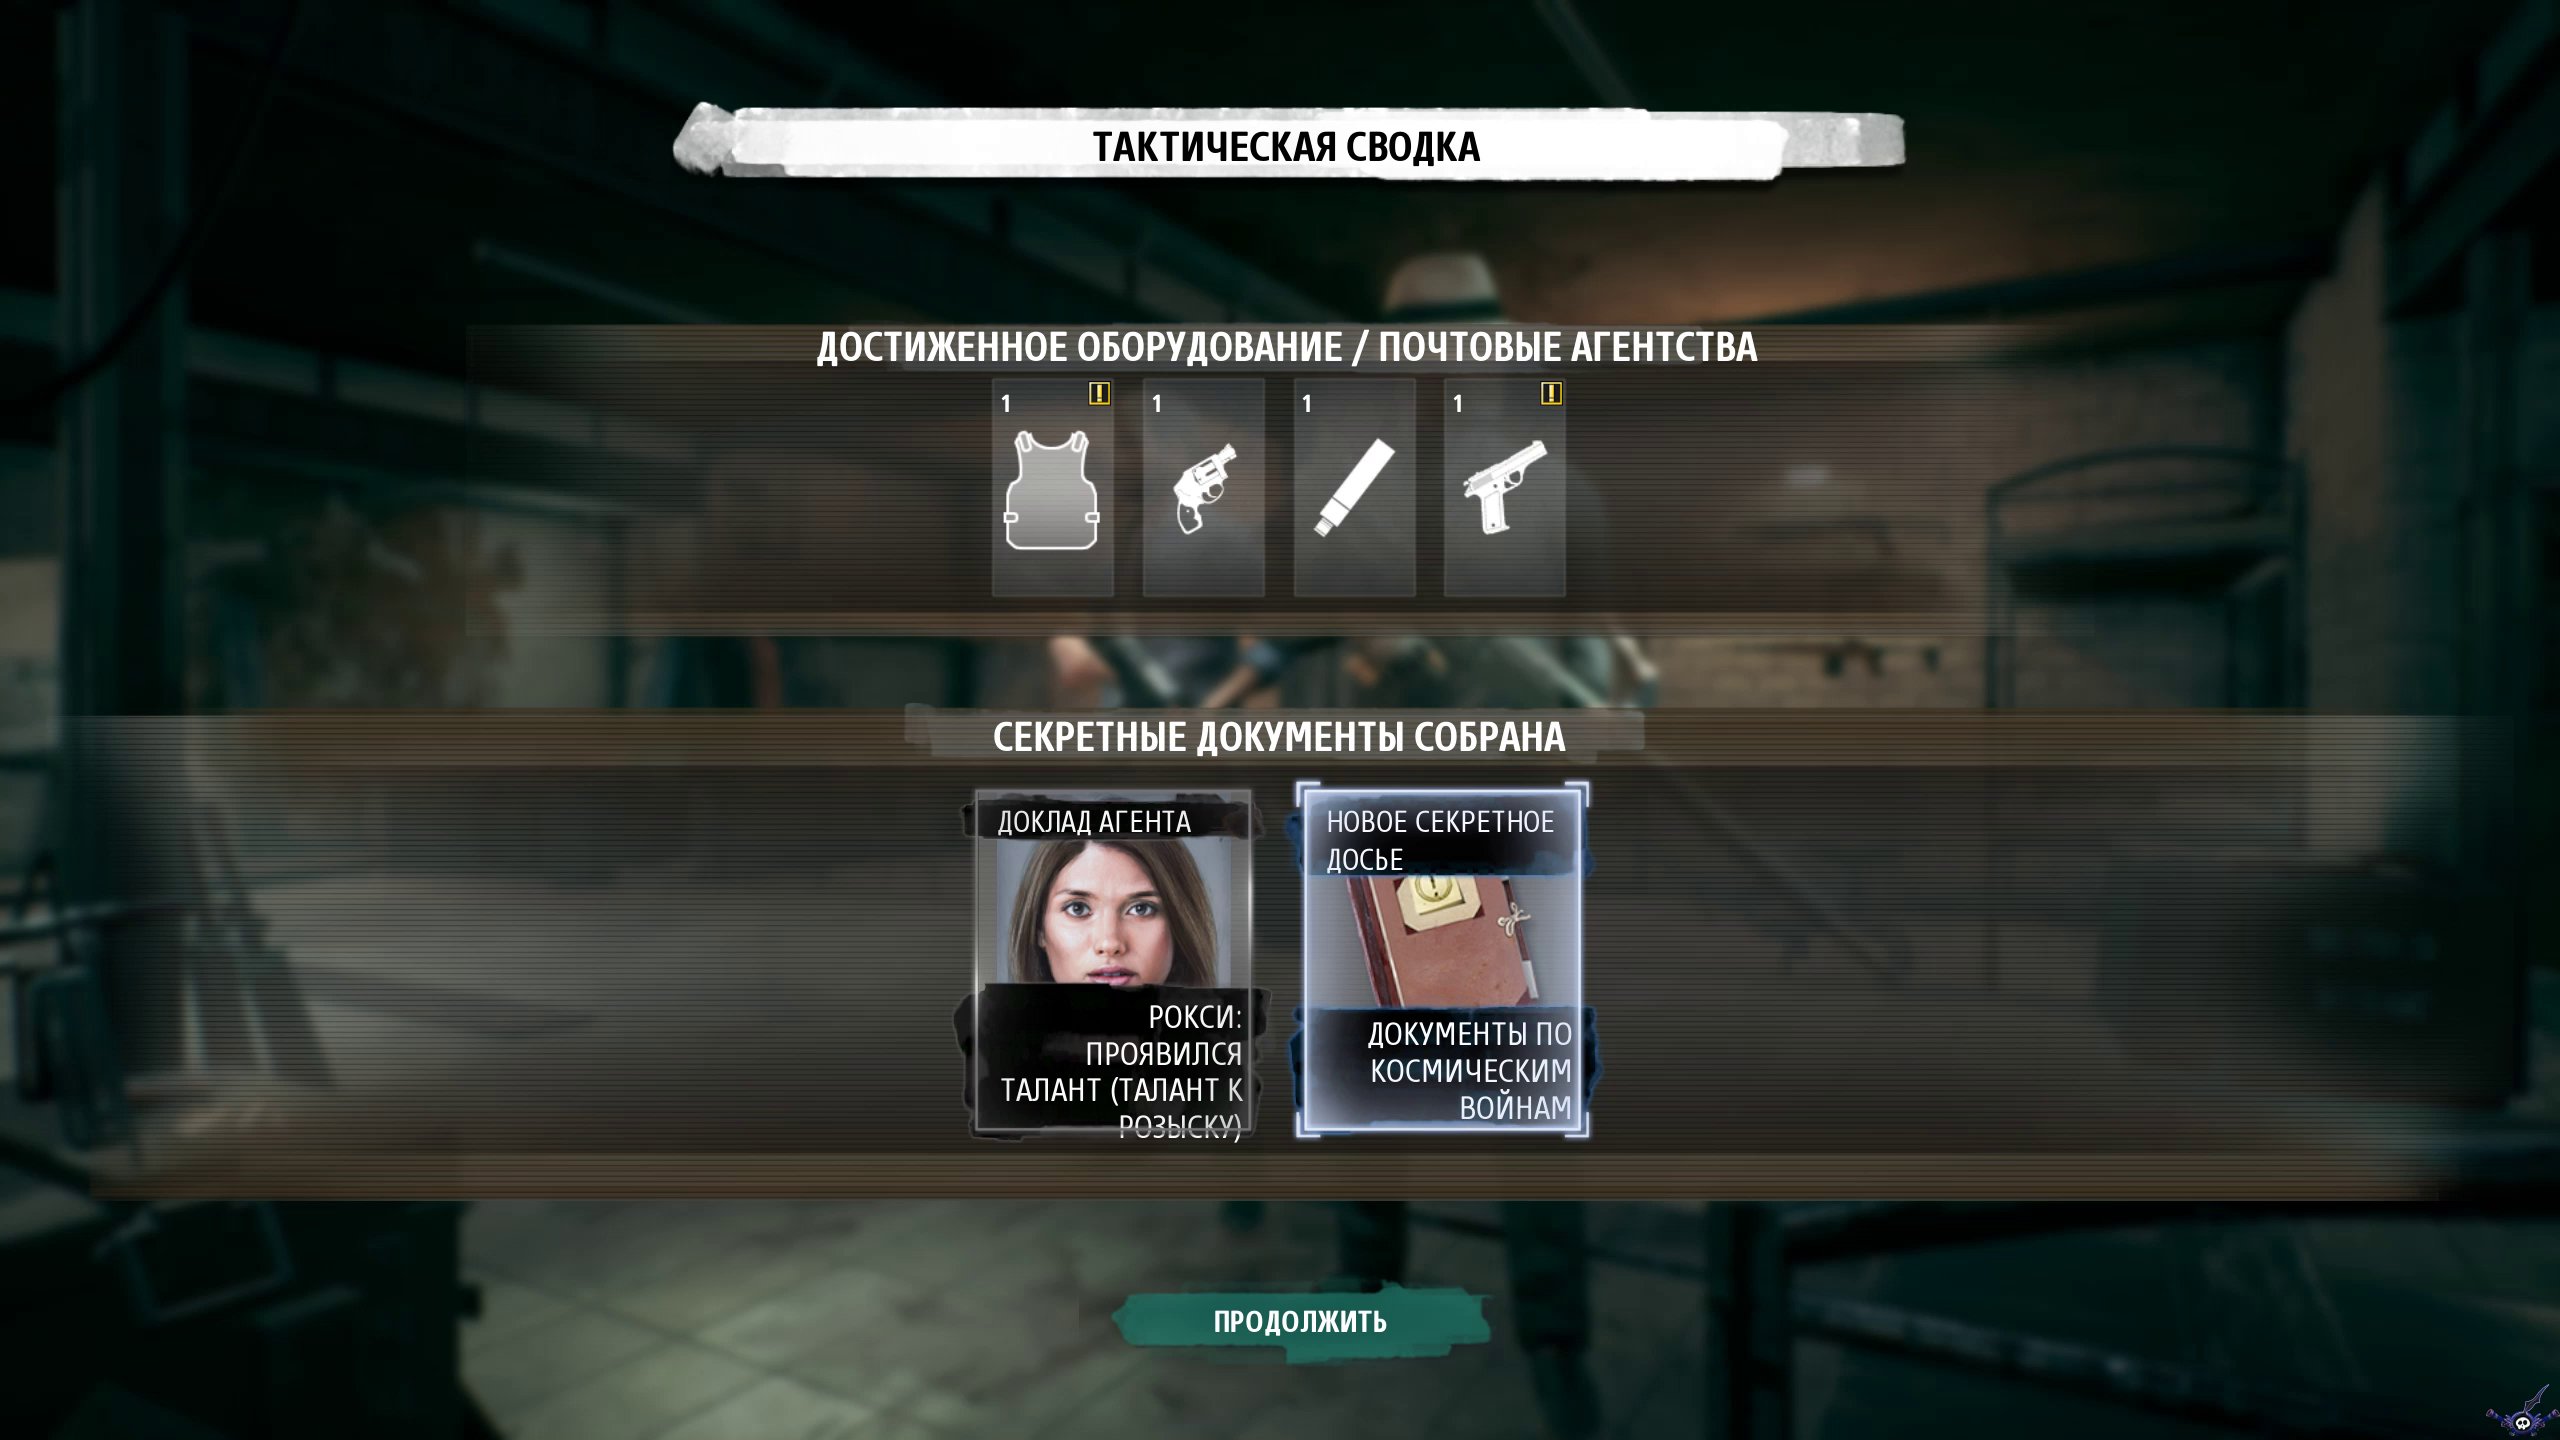 phantom-doctrine-screenshot